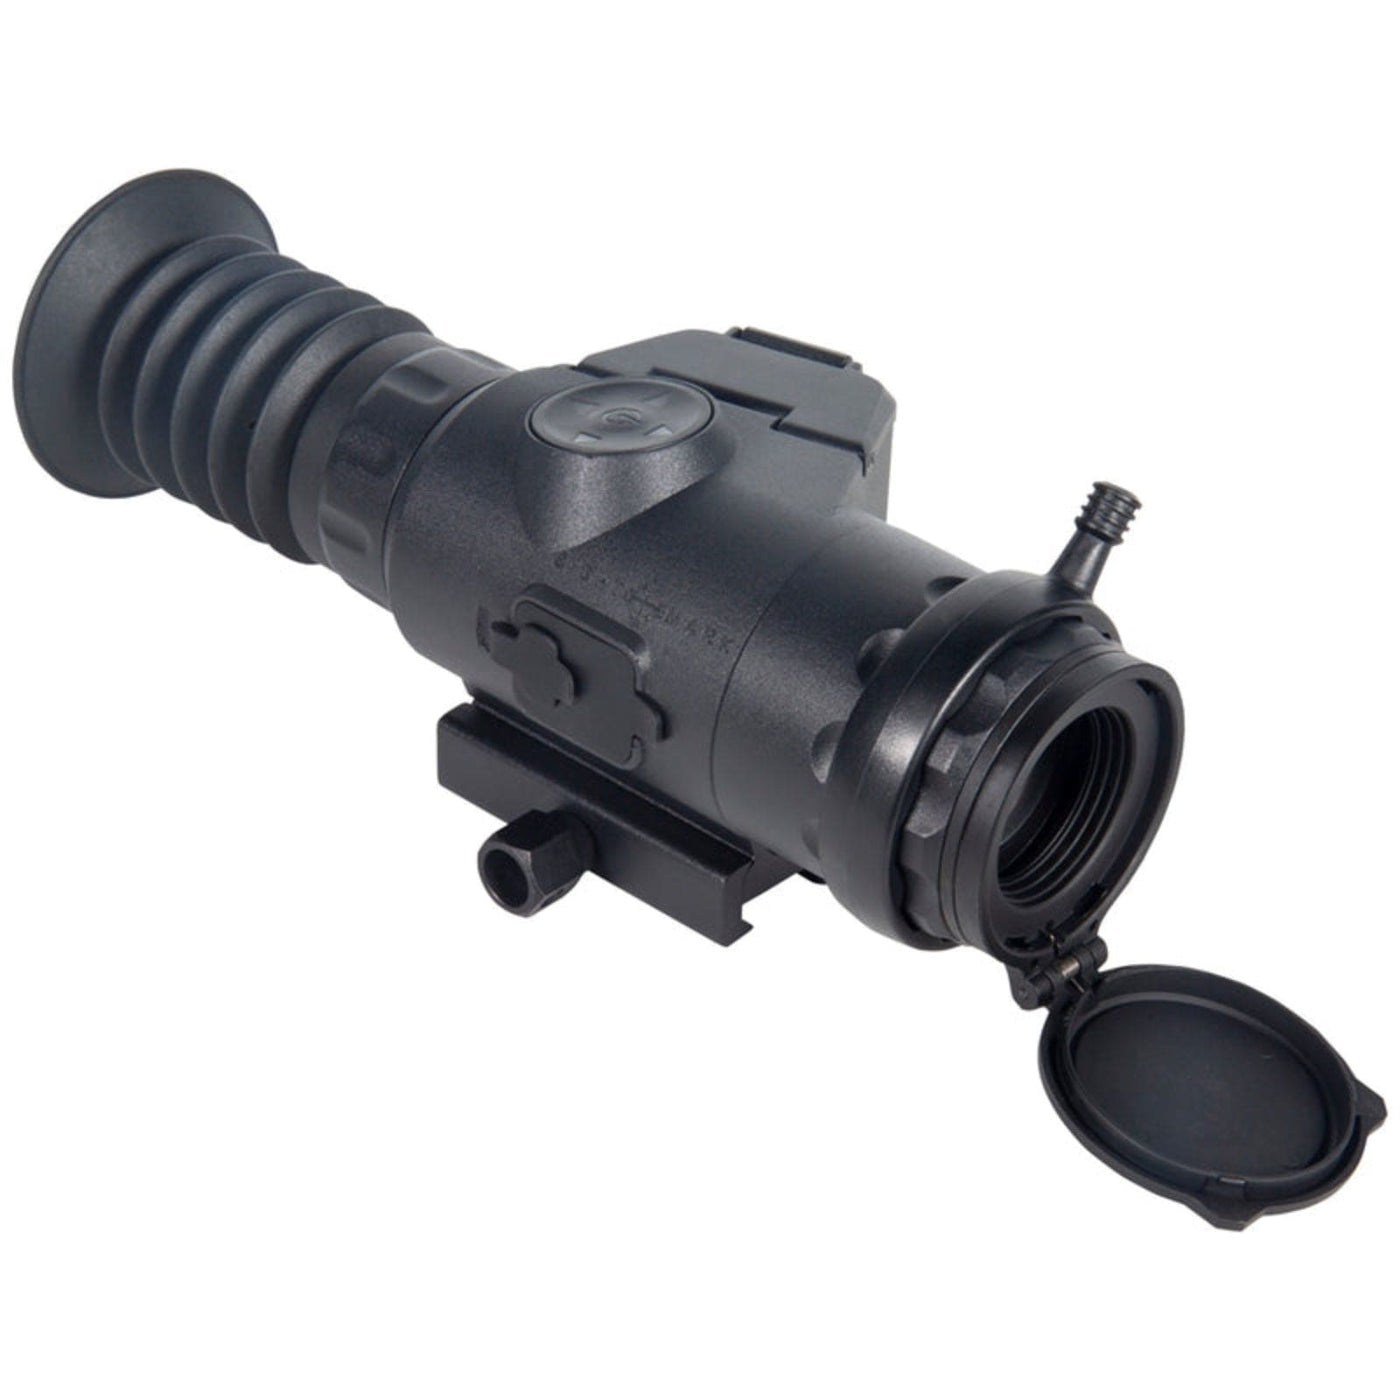 Sightmark Sightmark Wraith 4K Mini 2x Digital Night Vision Riflescope Nightvision And Thermal